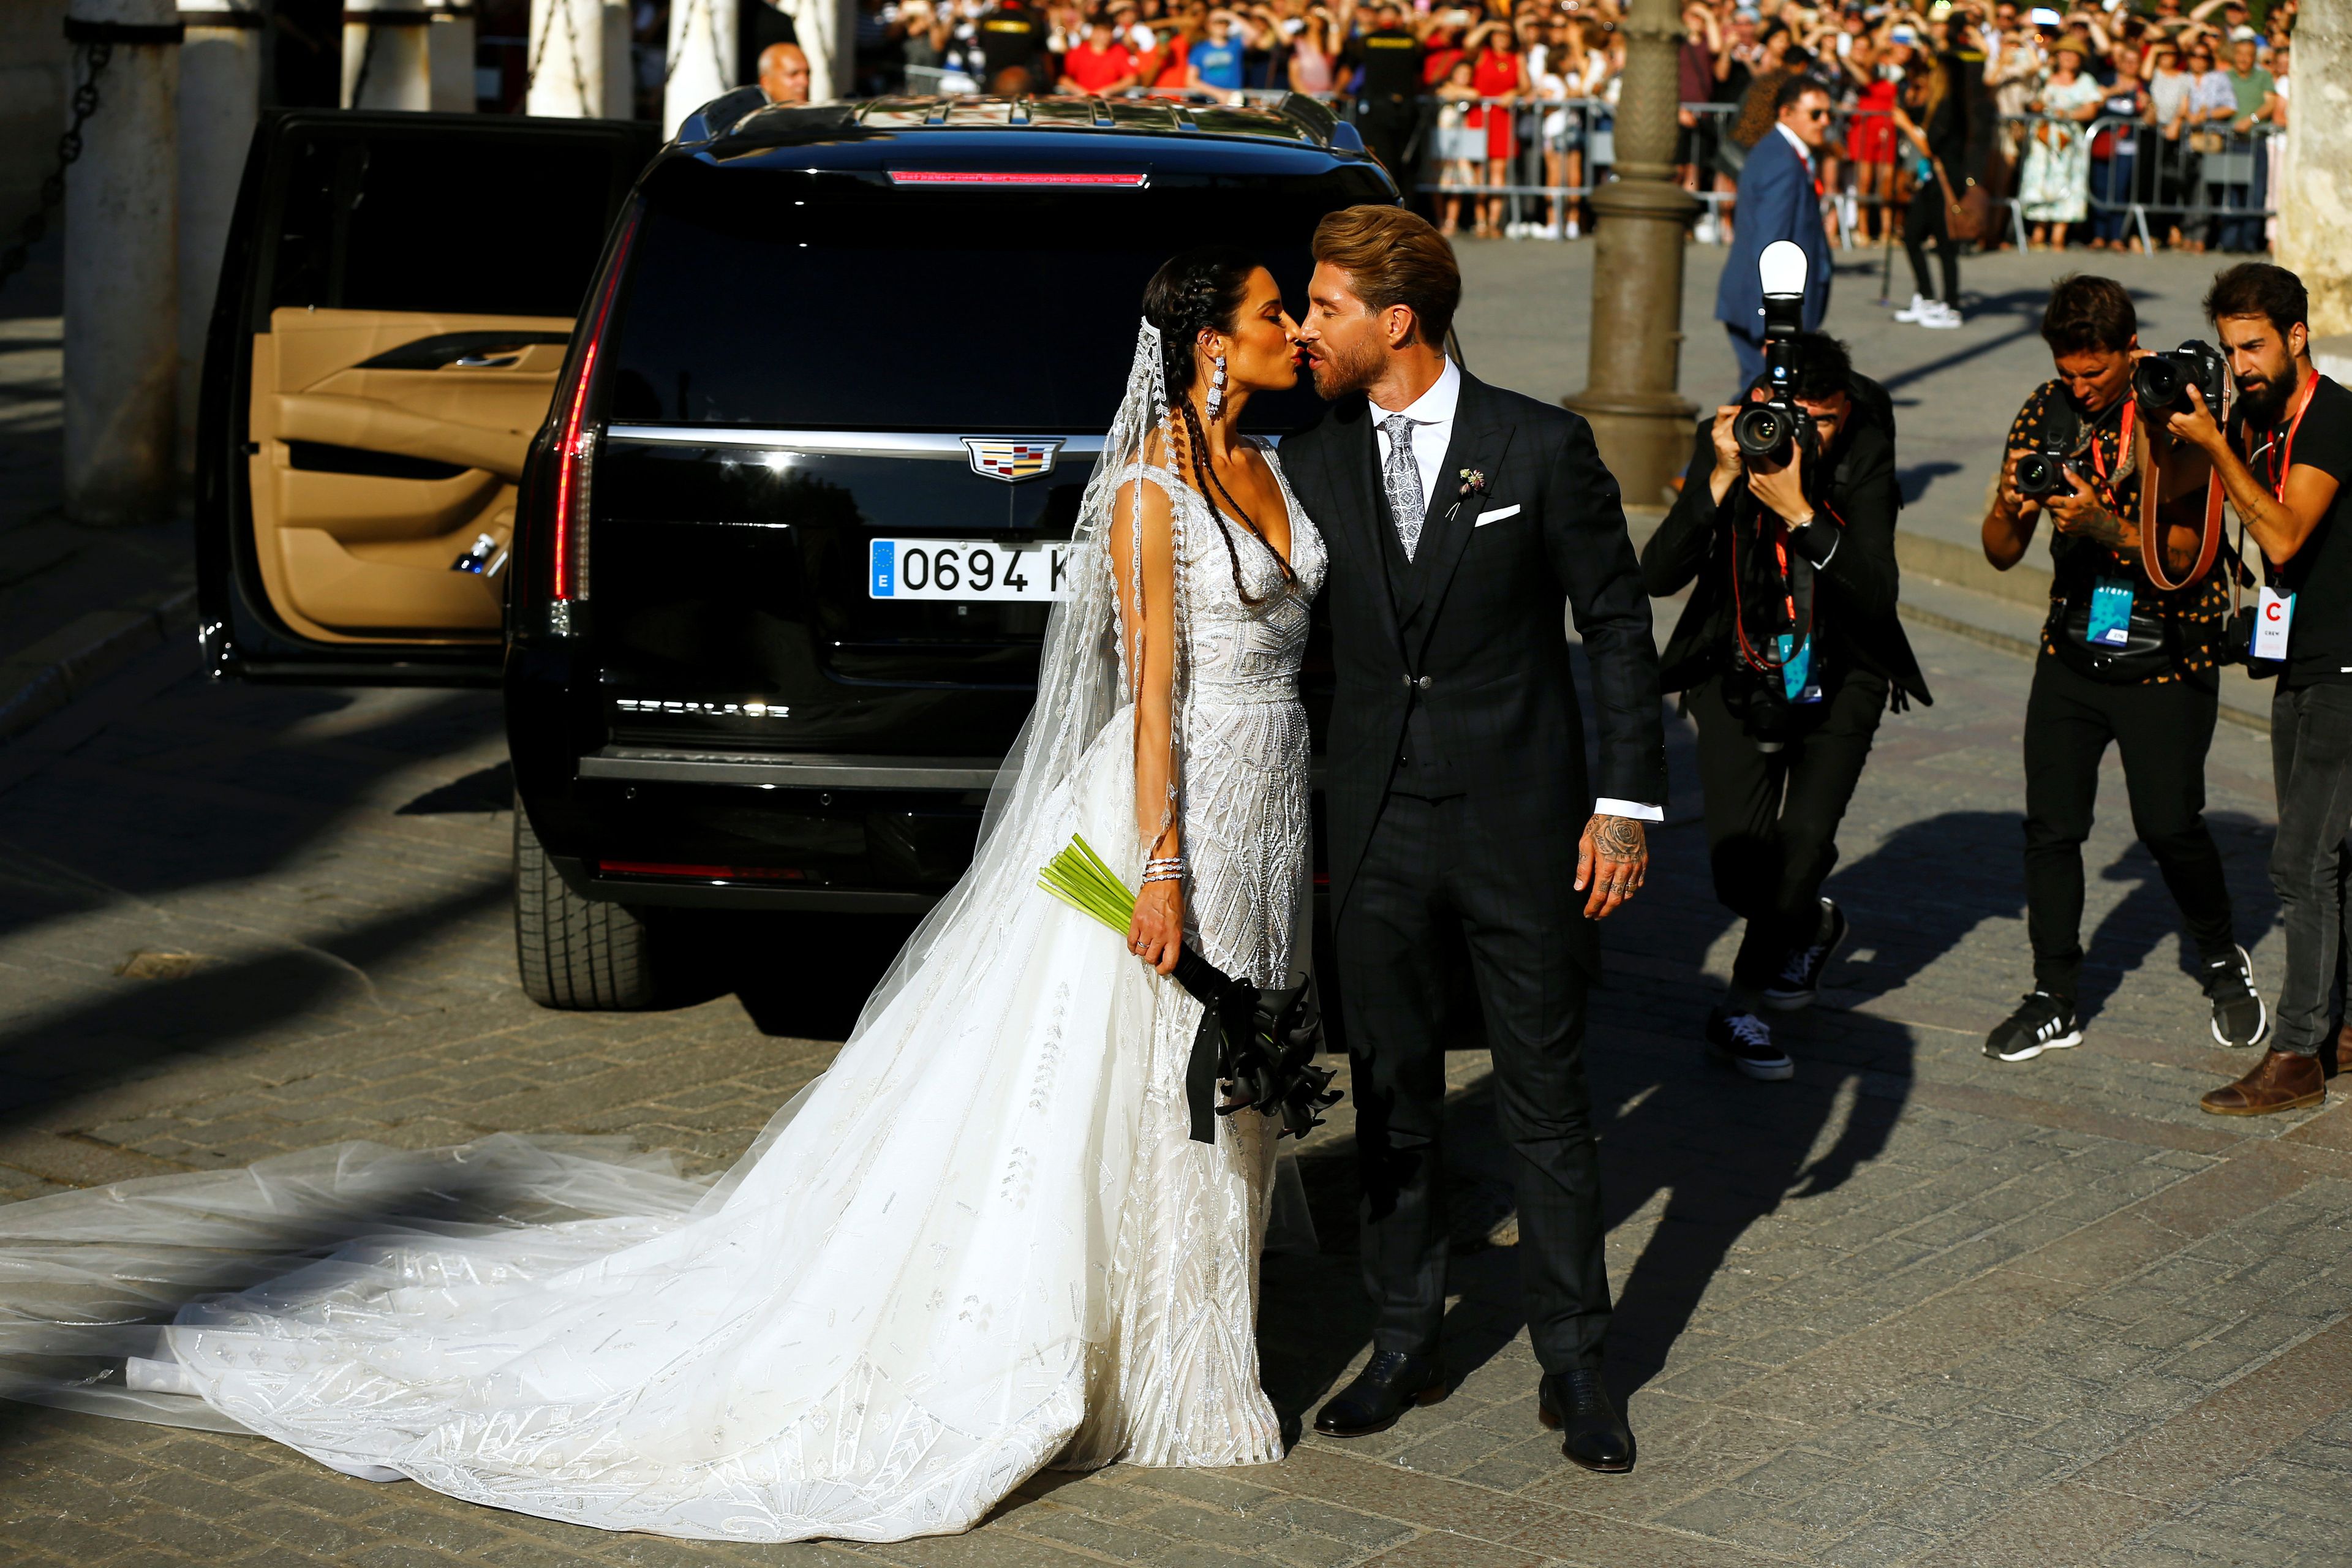 La boda de Sergio Ramos con Pilar Rubio.